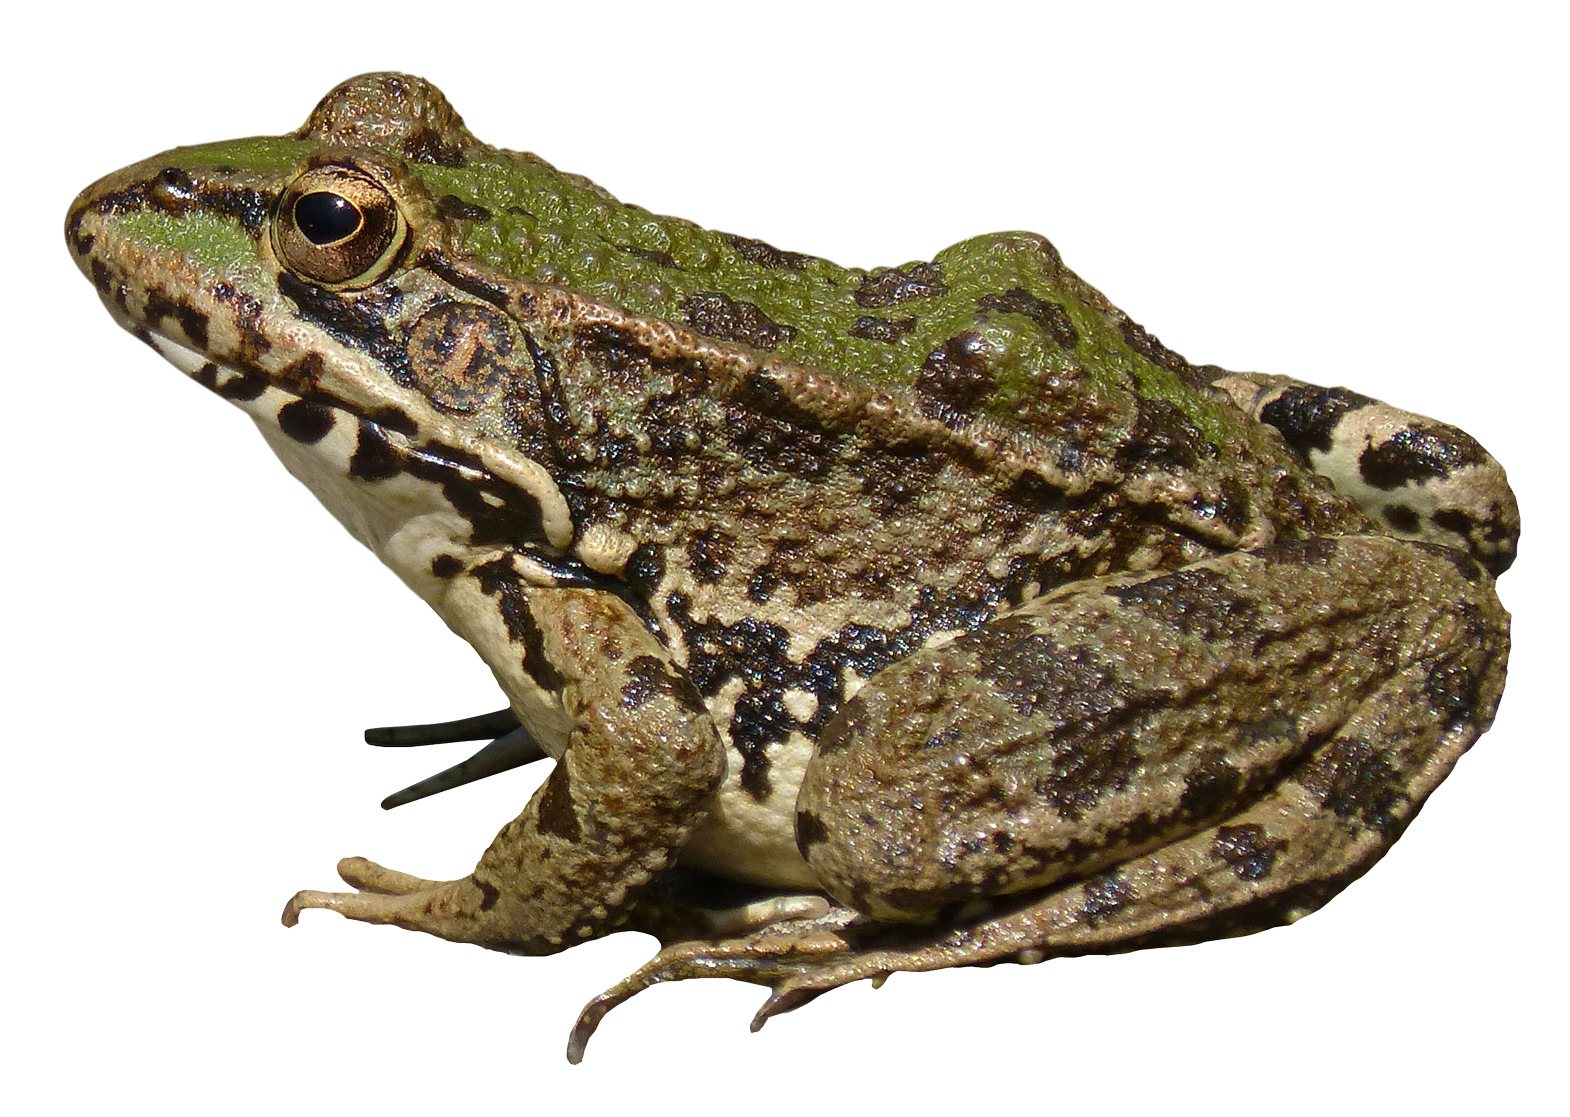 frog clipart transparent background